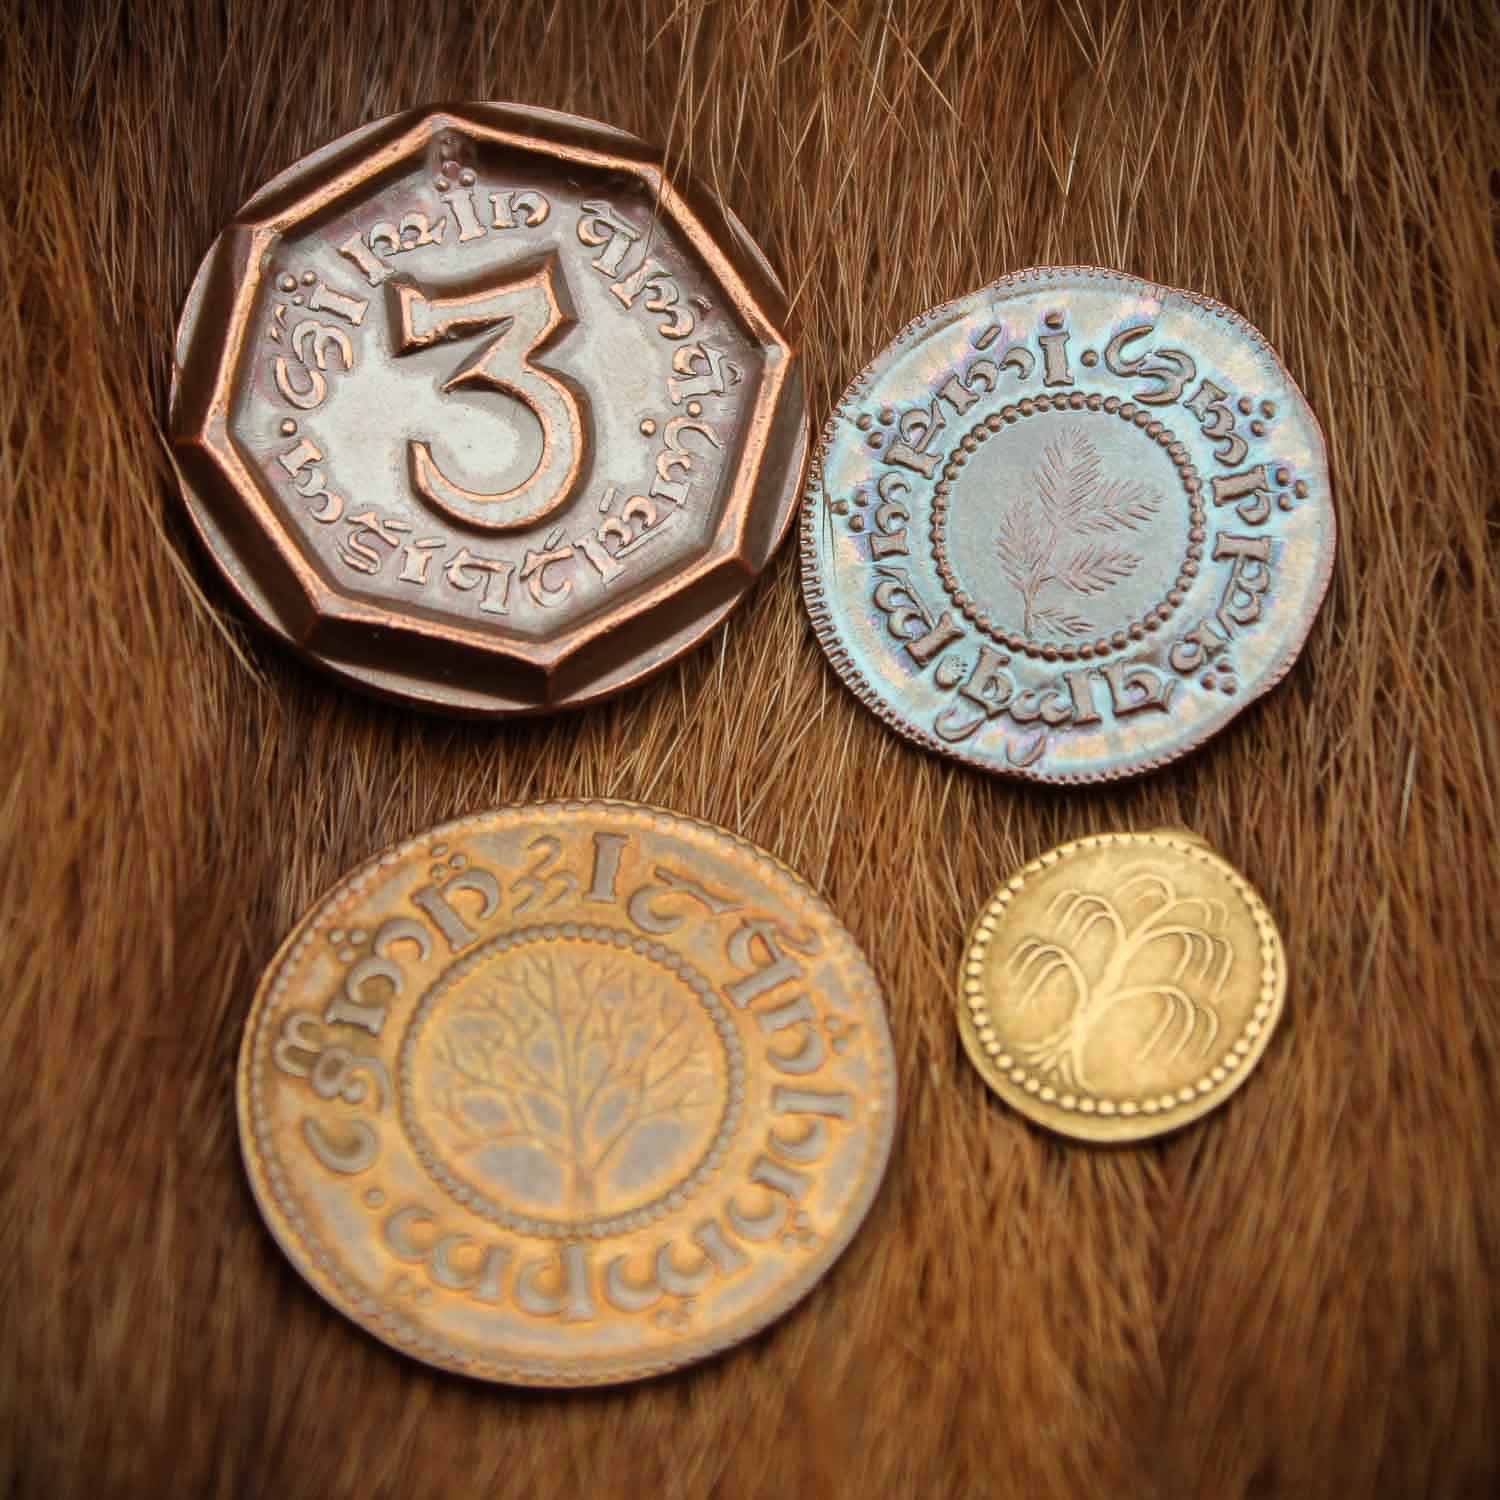 The Hobbit™ Set #1 - The Shire™ Set of Four Coins